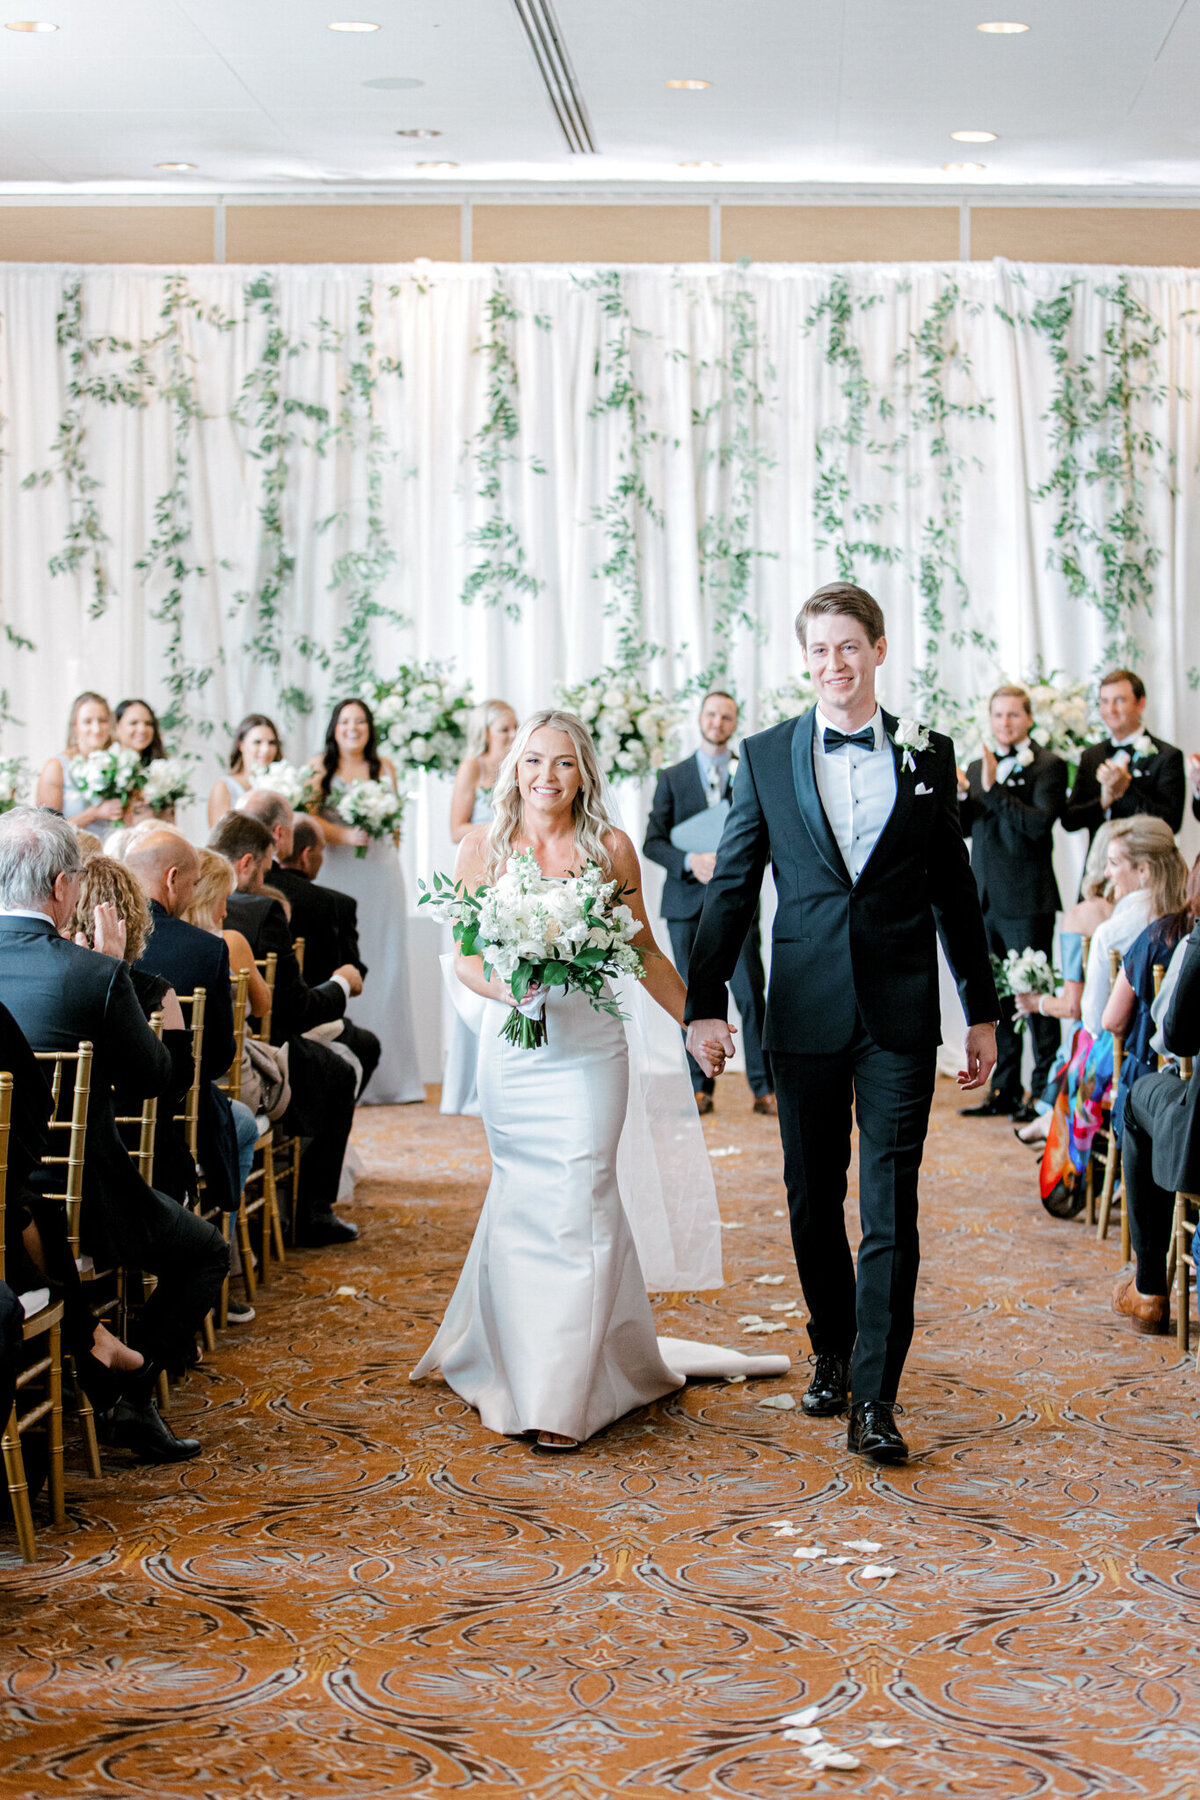 Madison & Michael's Wedding at Union Station | Dallas Wedding Photographer | Sami Kathryn Photography-131